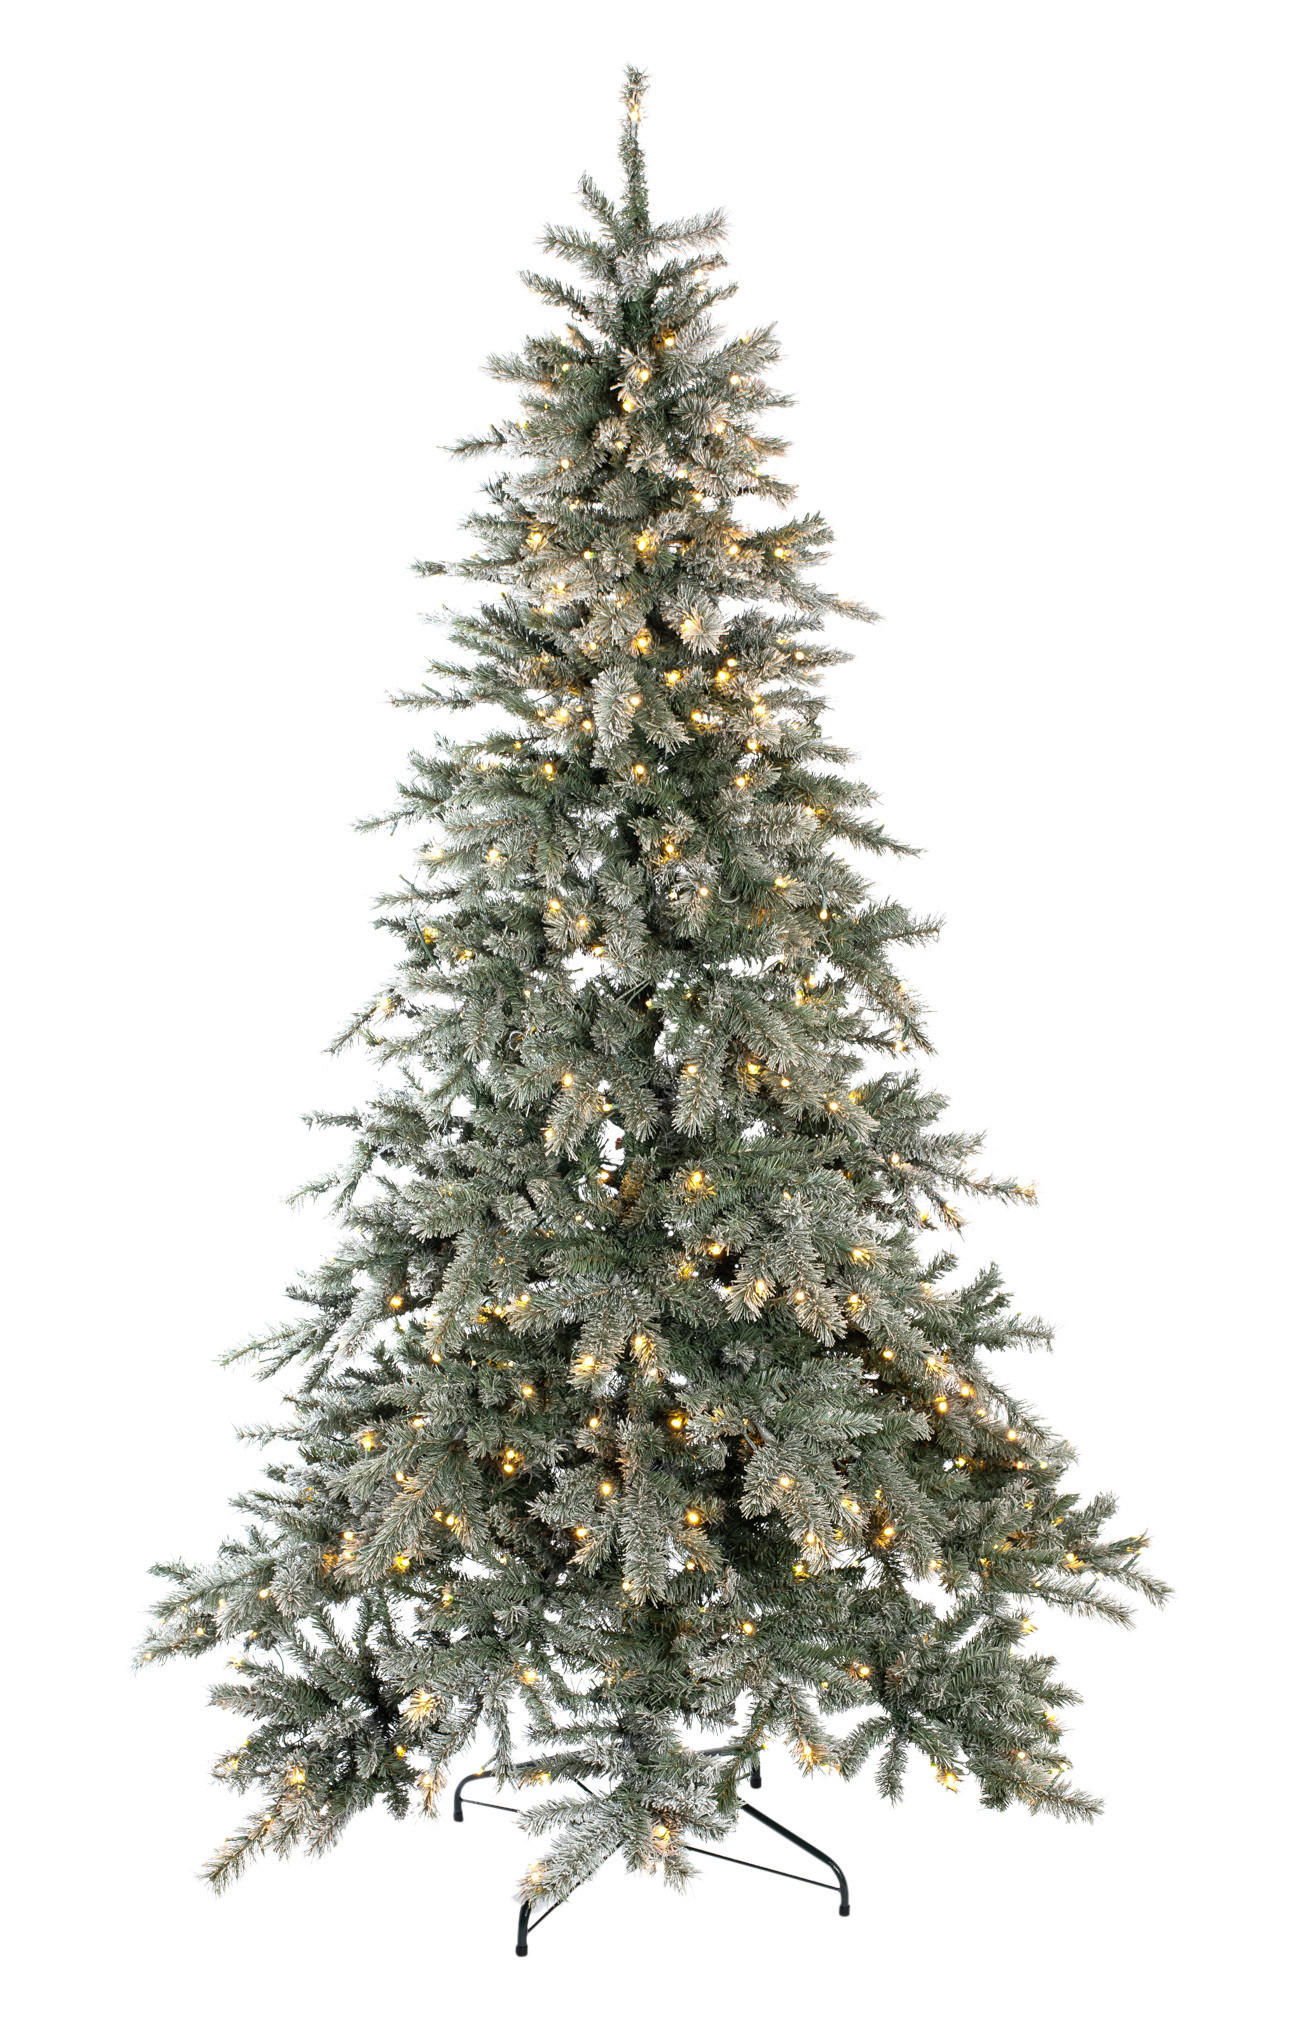 Evergreen Weihnachtsbaum Fichte Frost grün PVC H/D: ca. 180x116 cm